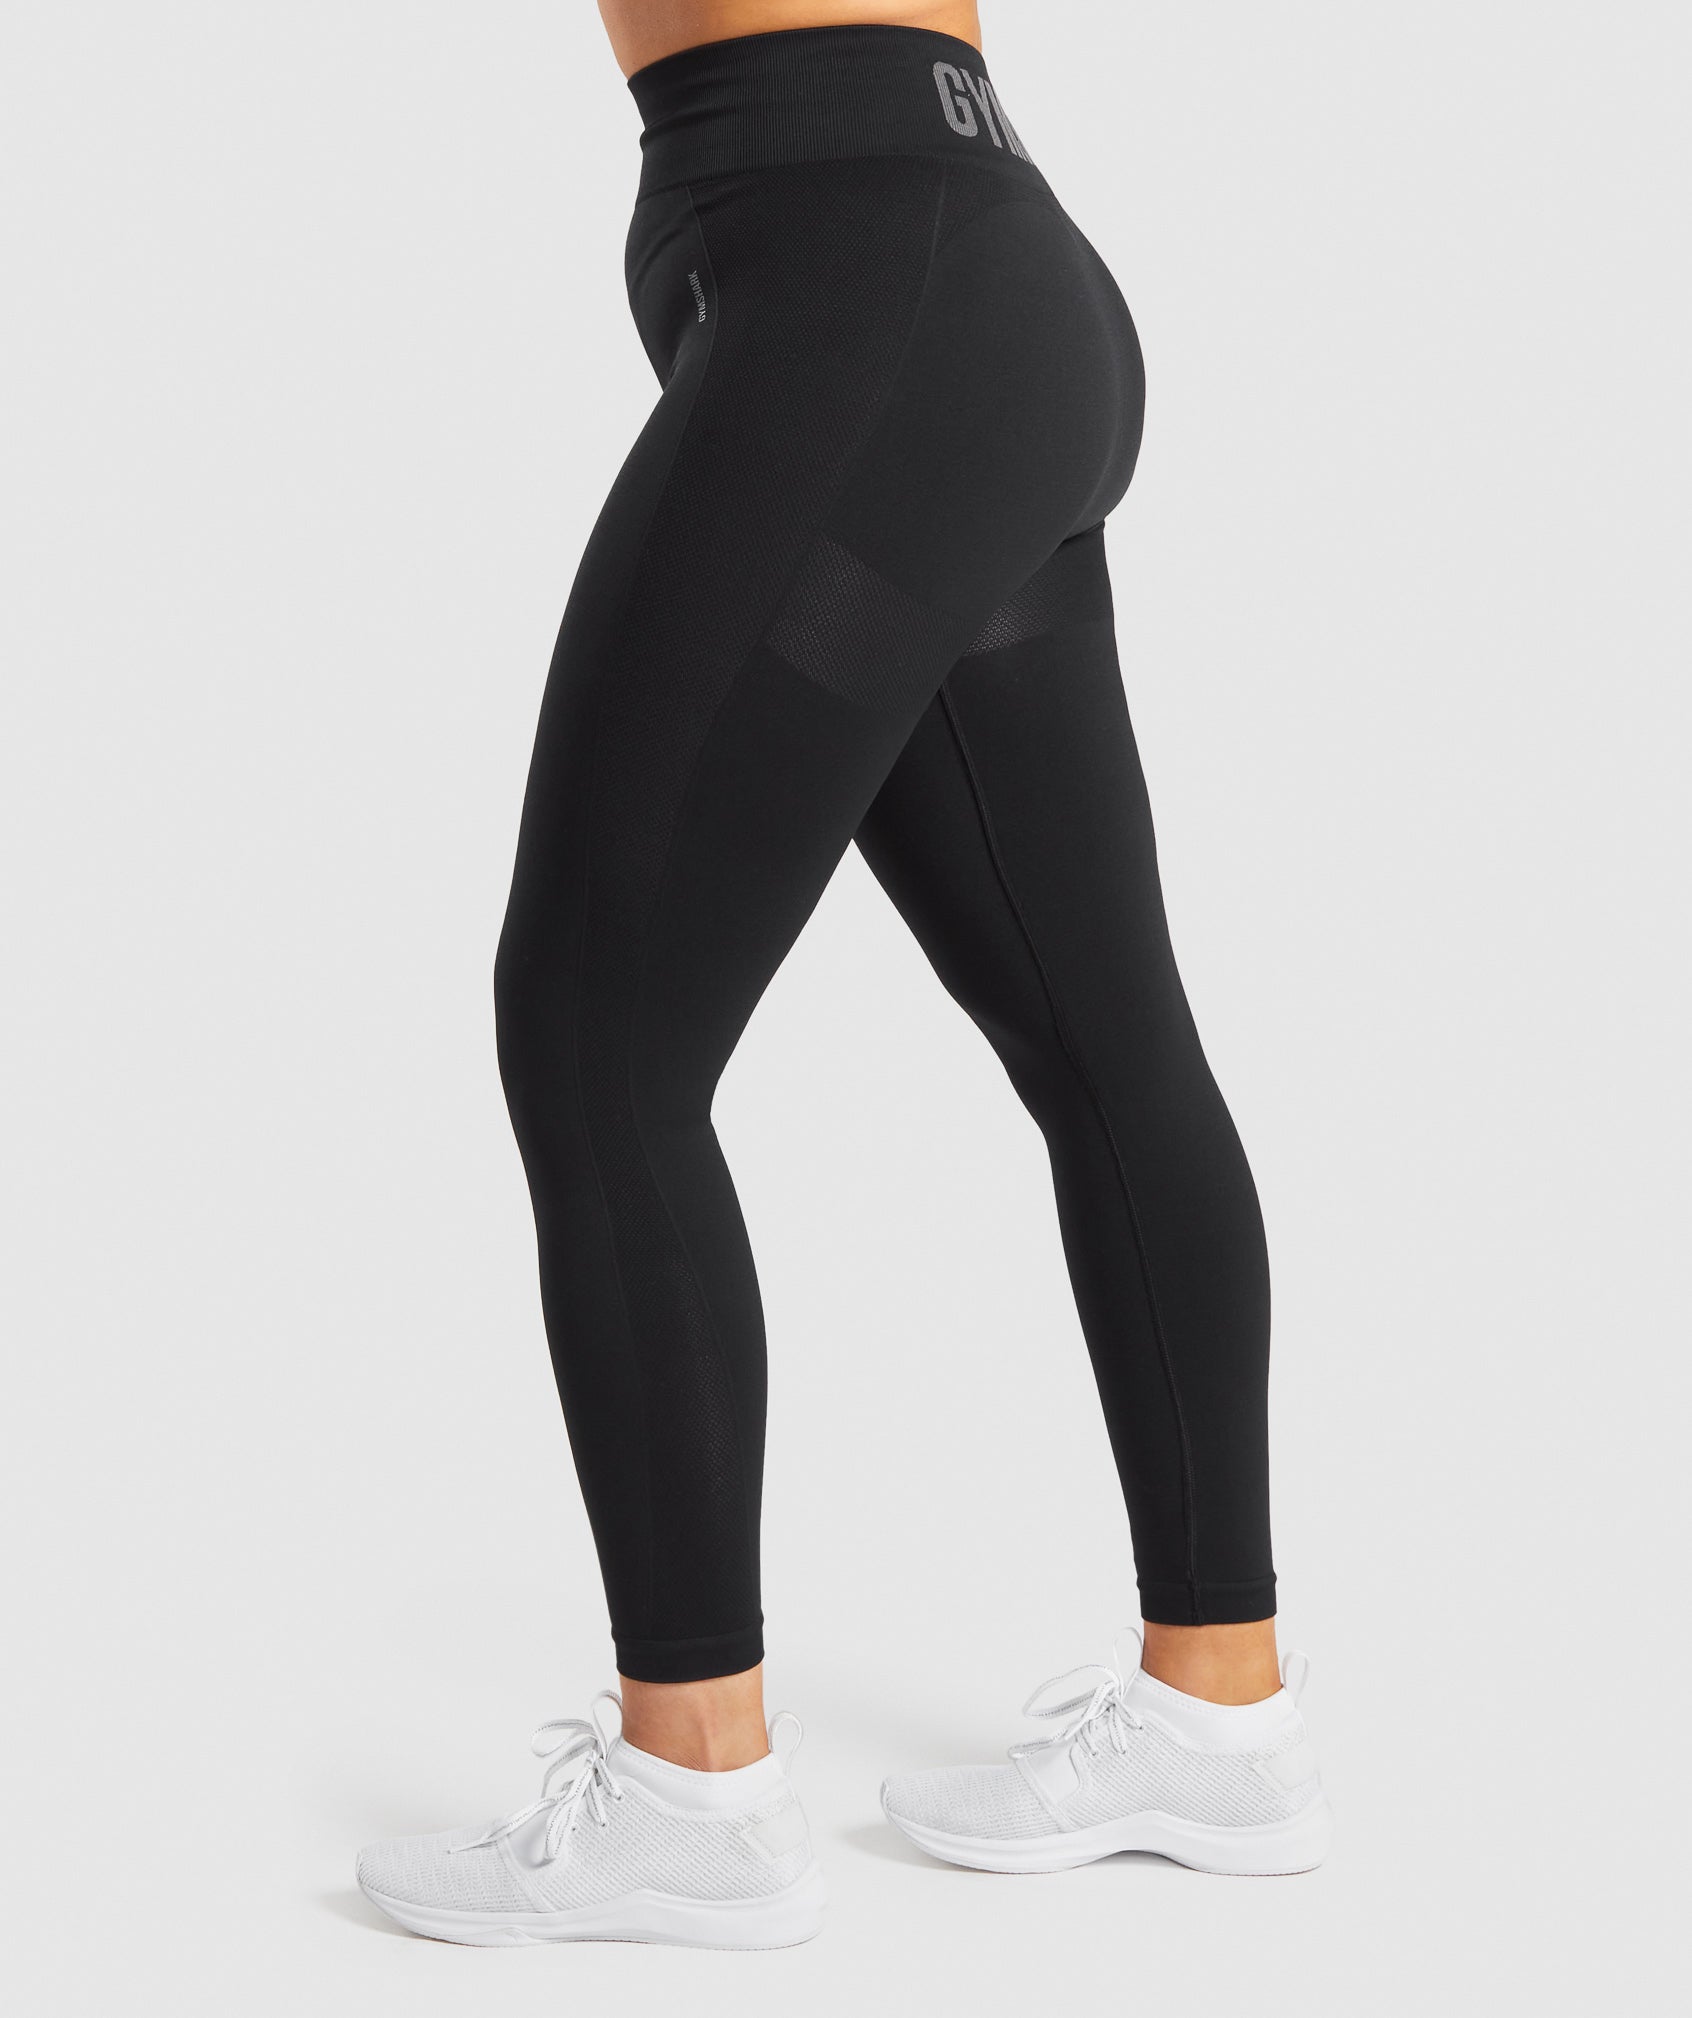 Ladies Usa Pro Eco Reversible Charcoal/Black Sports Leggings Size 8 XS RRP  £25